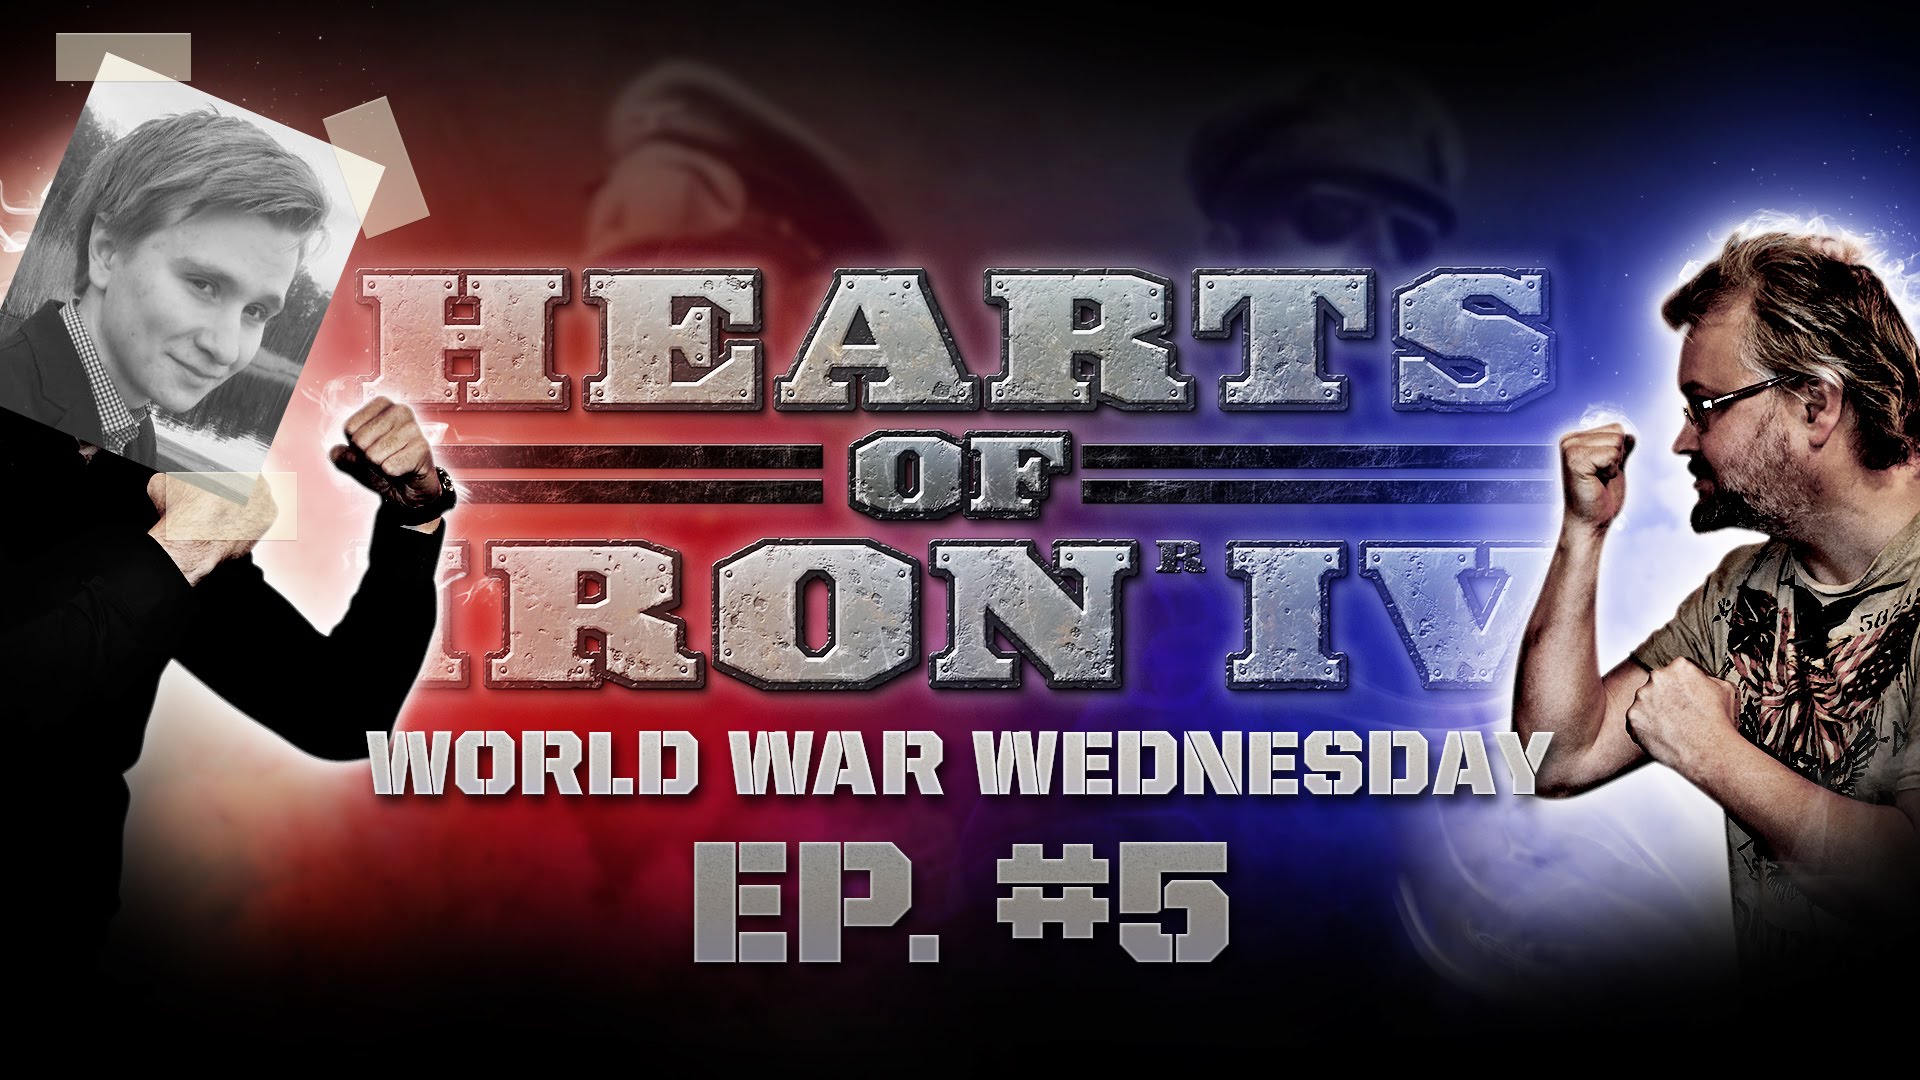 Hearts of Iron IV – “World War Wednesday” Part 5